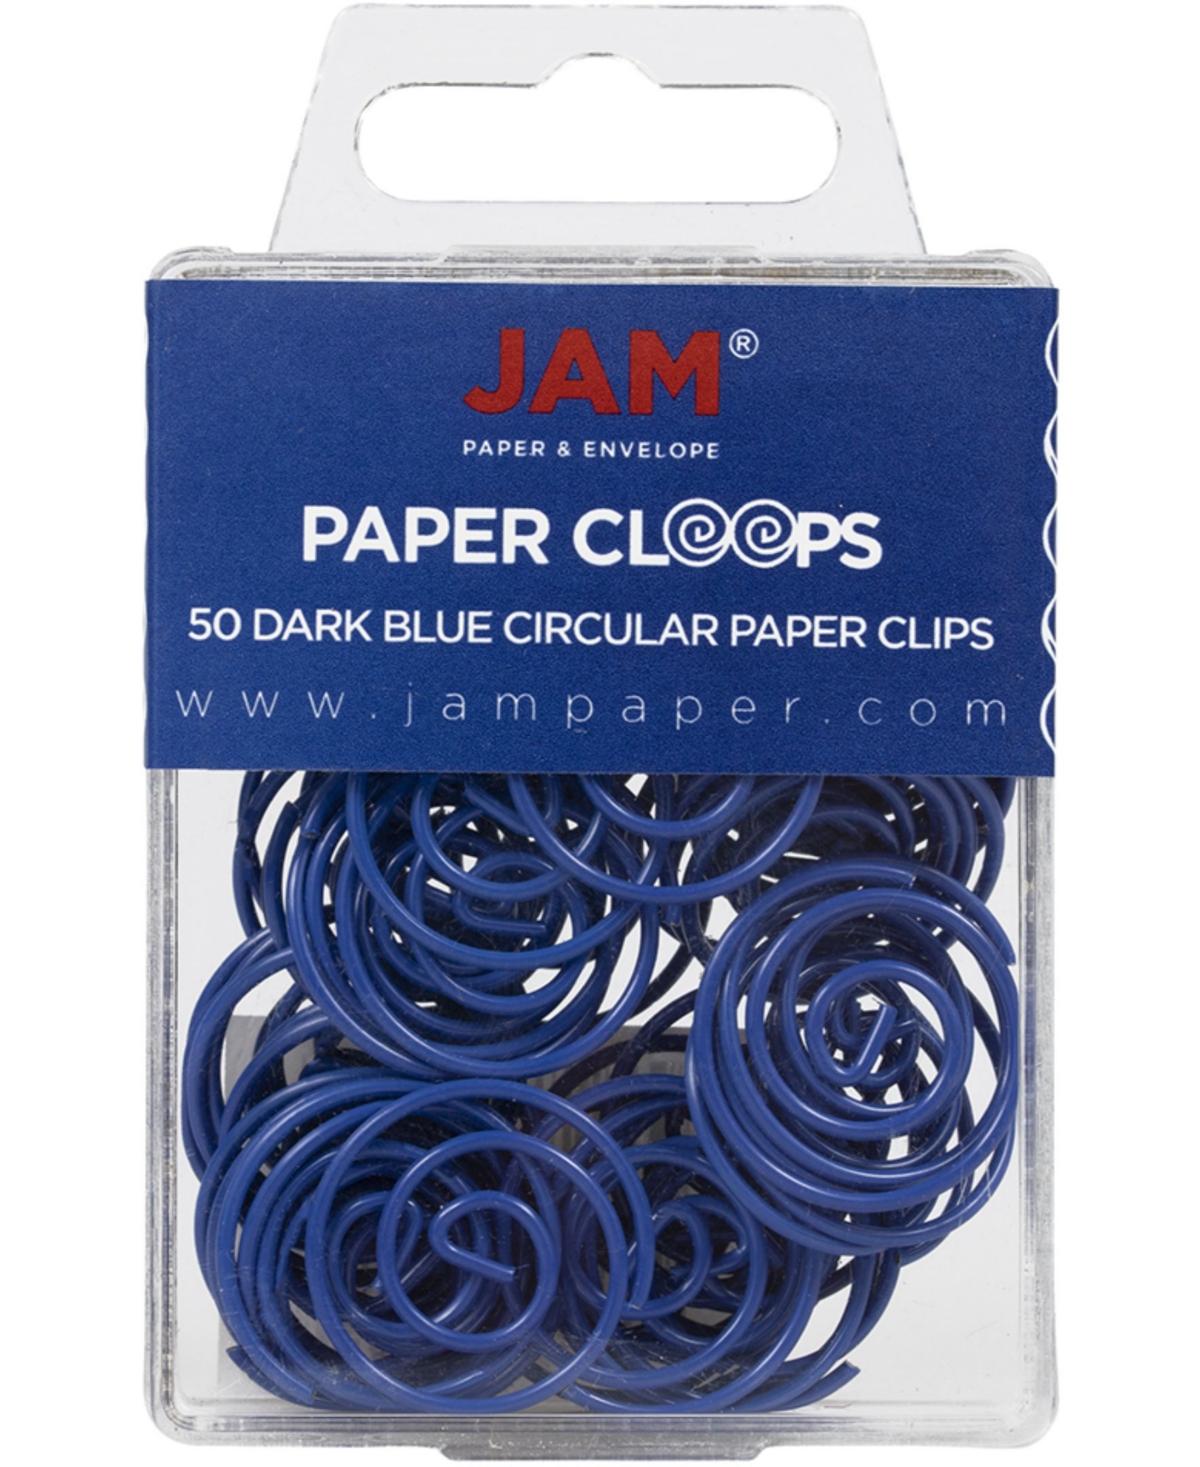 Jam Paper Circular Paper Clips In Dark Blue